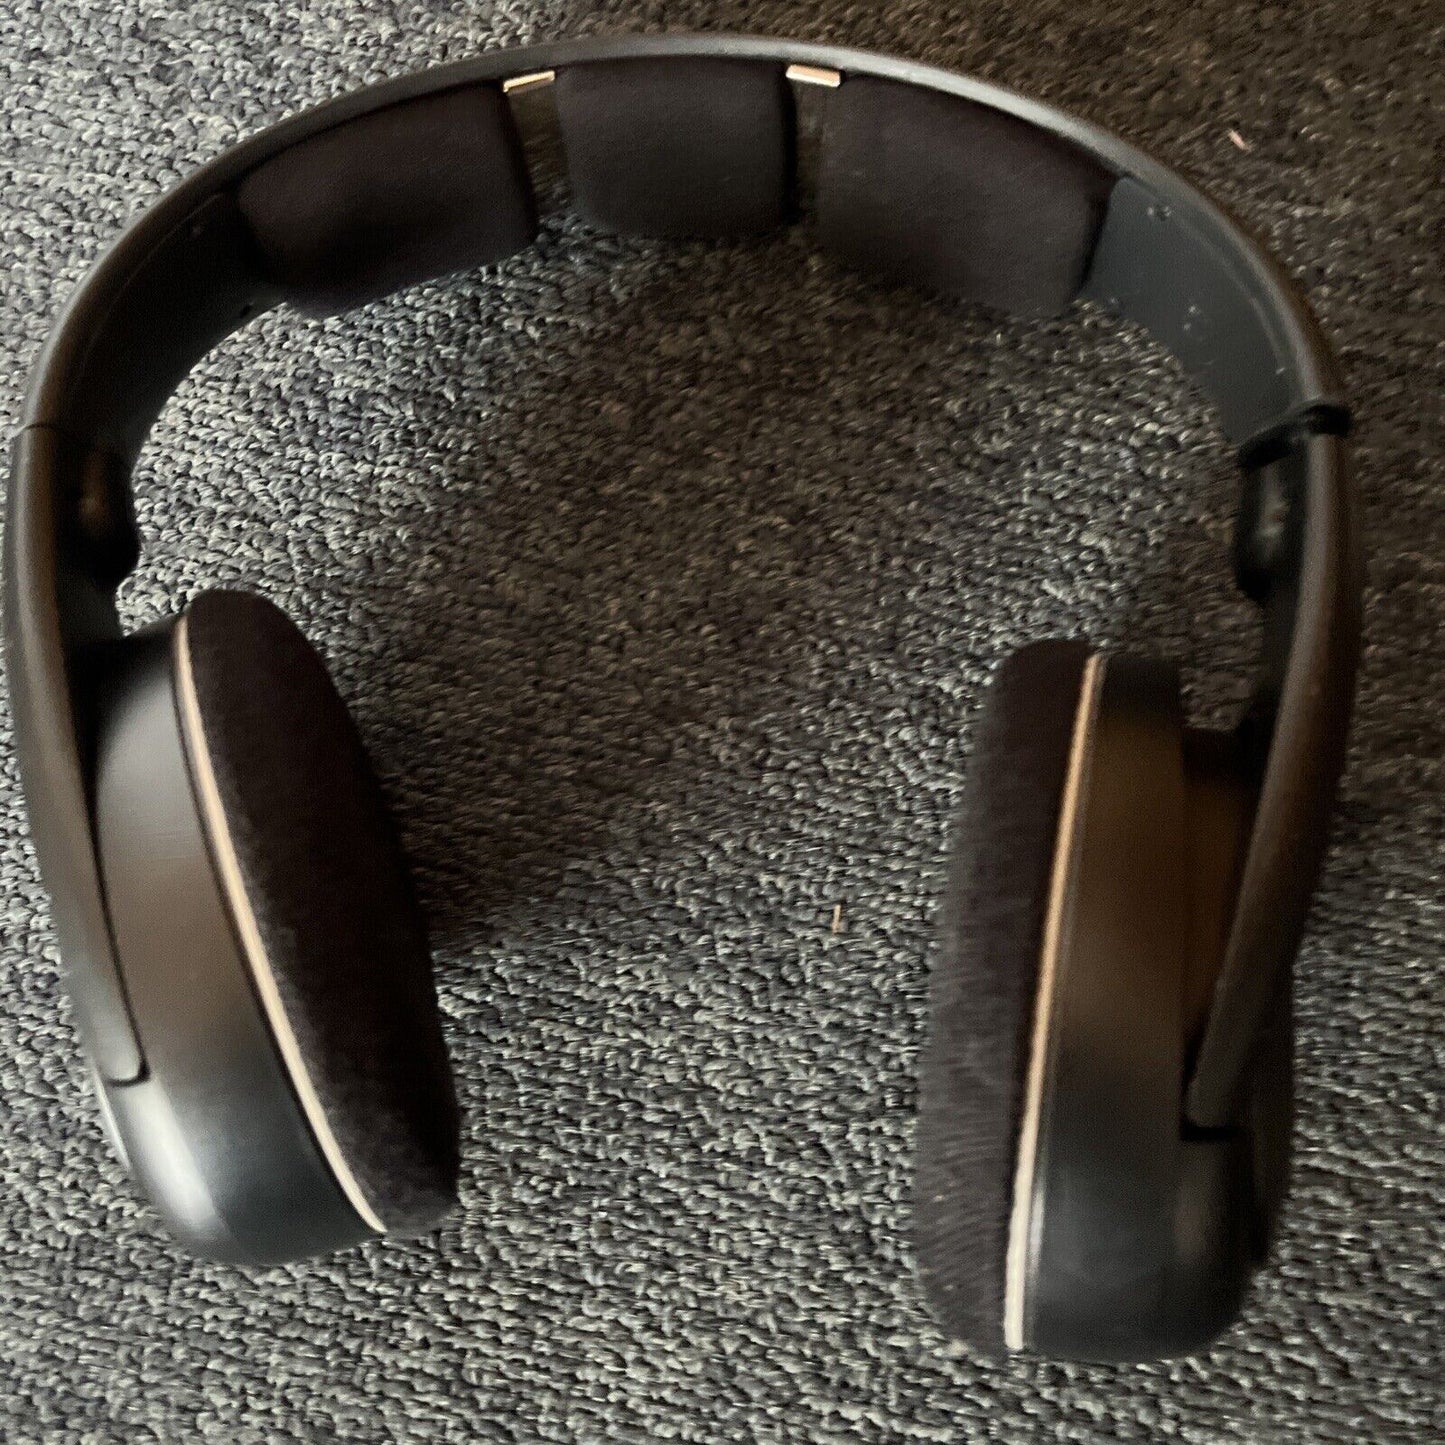 Sennheiser Wireless Headphones TR120 II